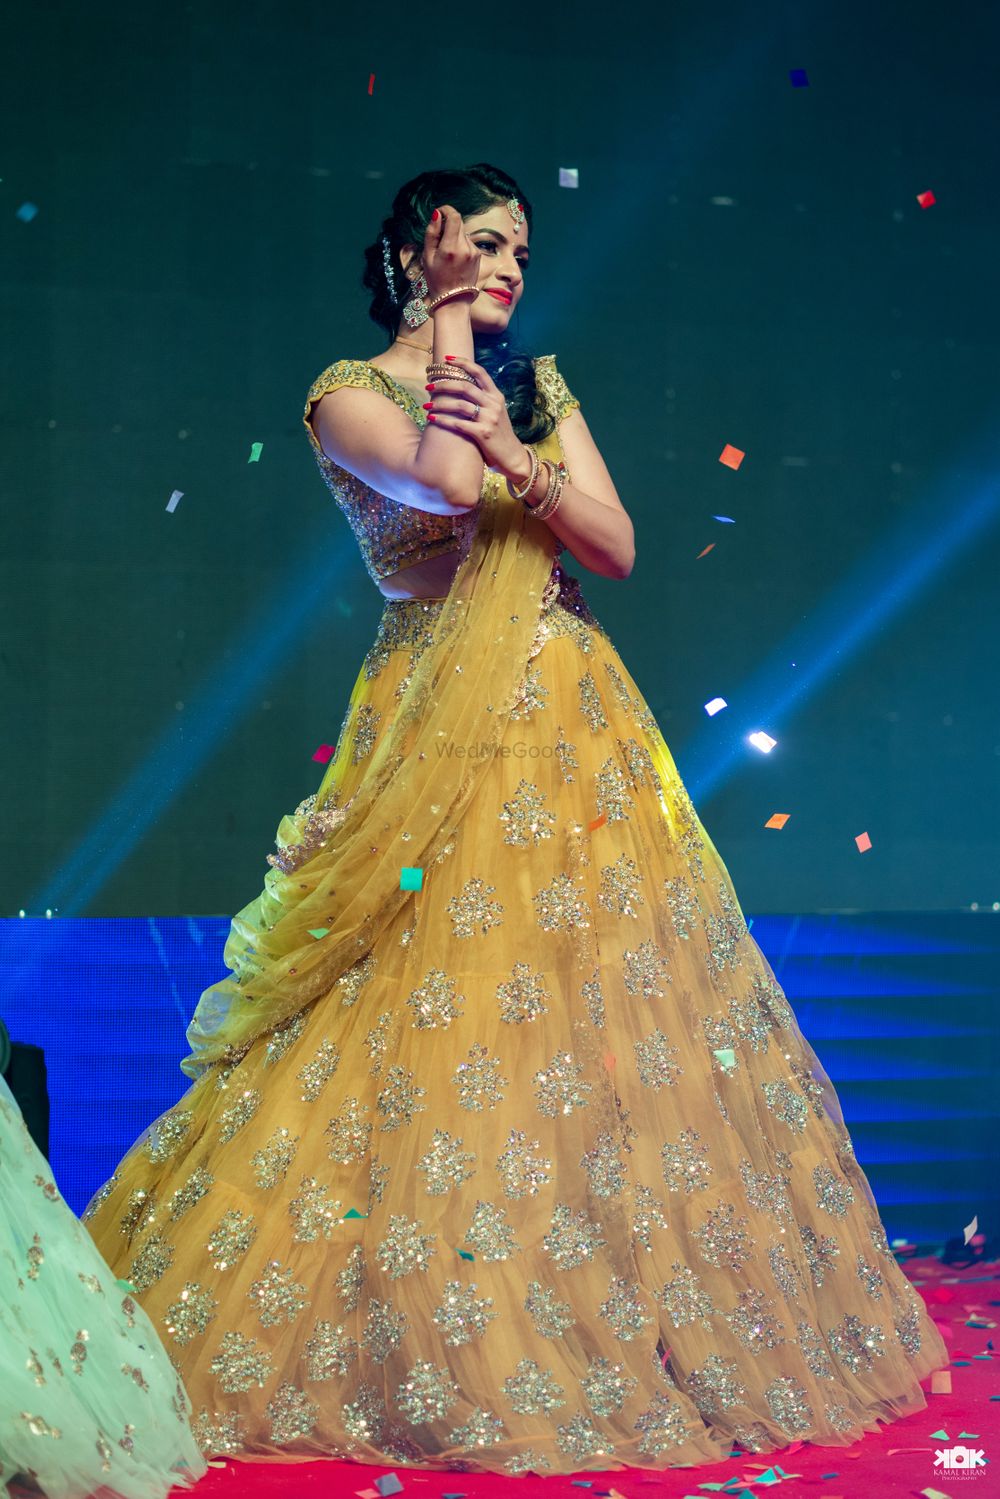 Photo of Bride dancing in yellow sangeet lehenga on stage